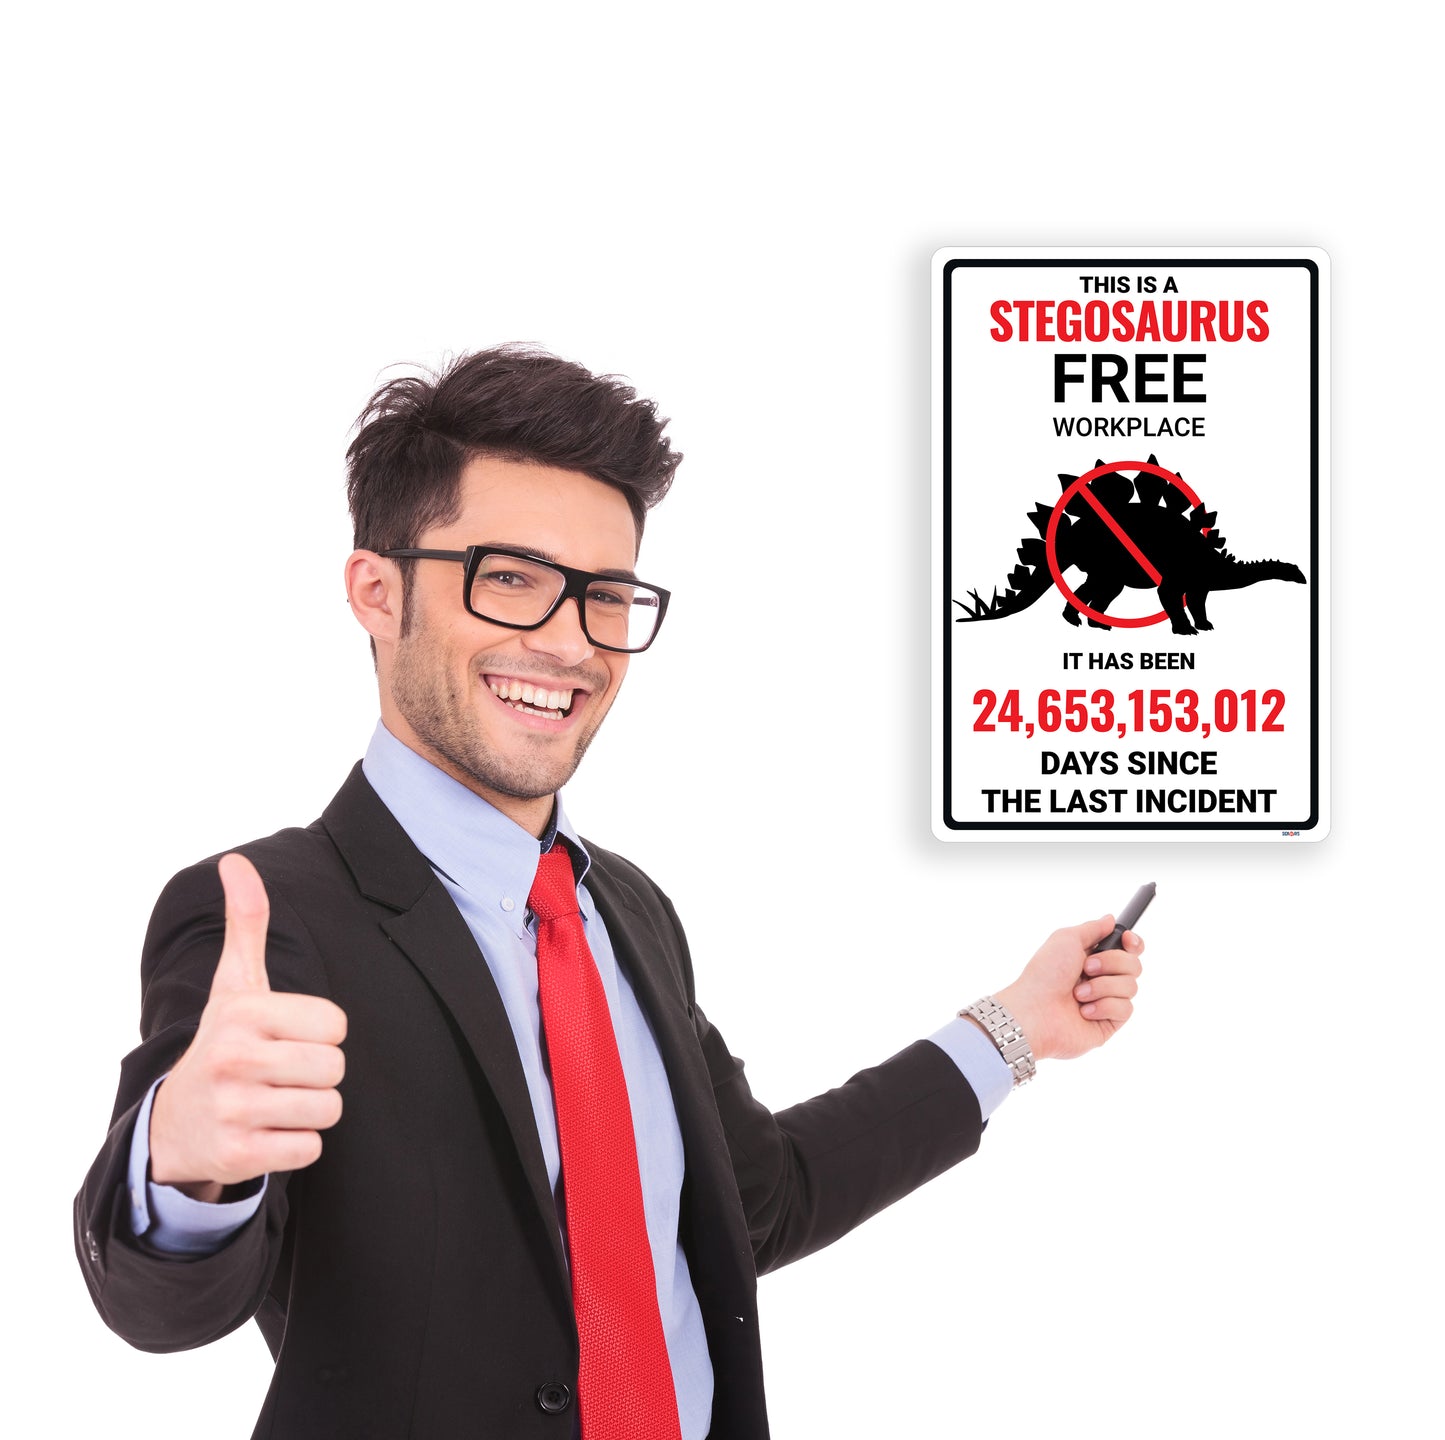 Stegosaurus Free Workplace Dinosaur Sign